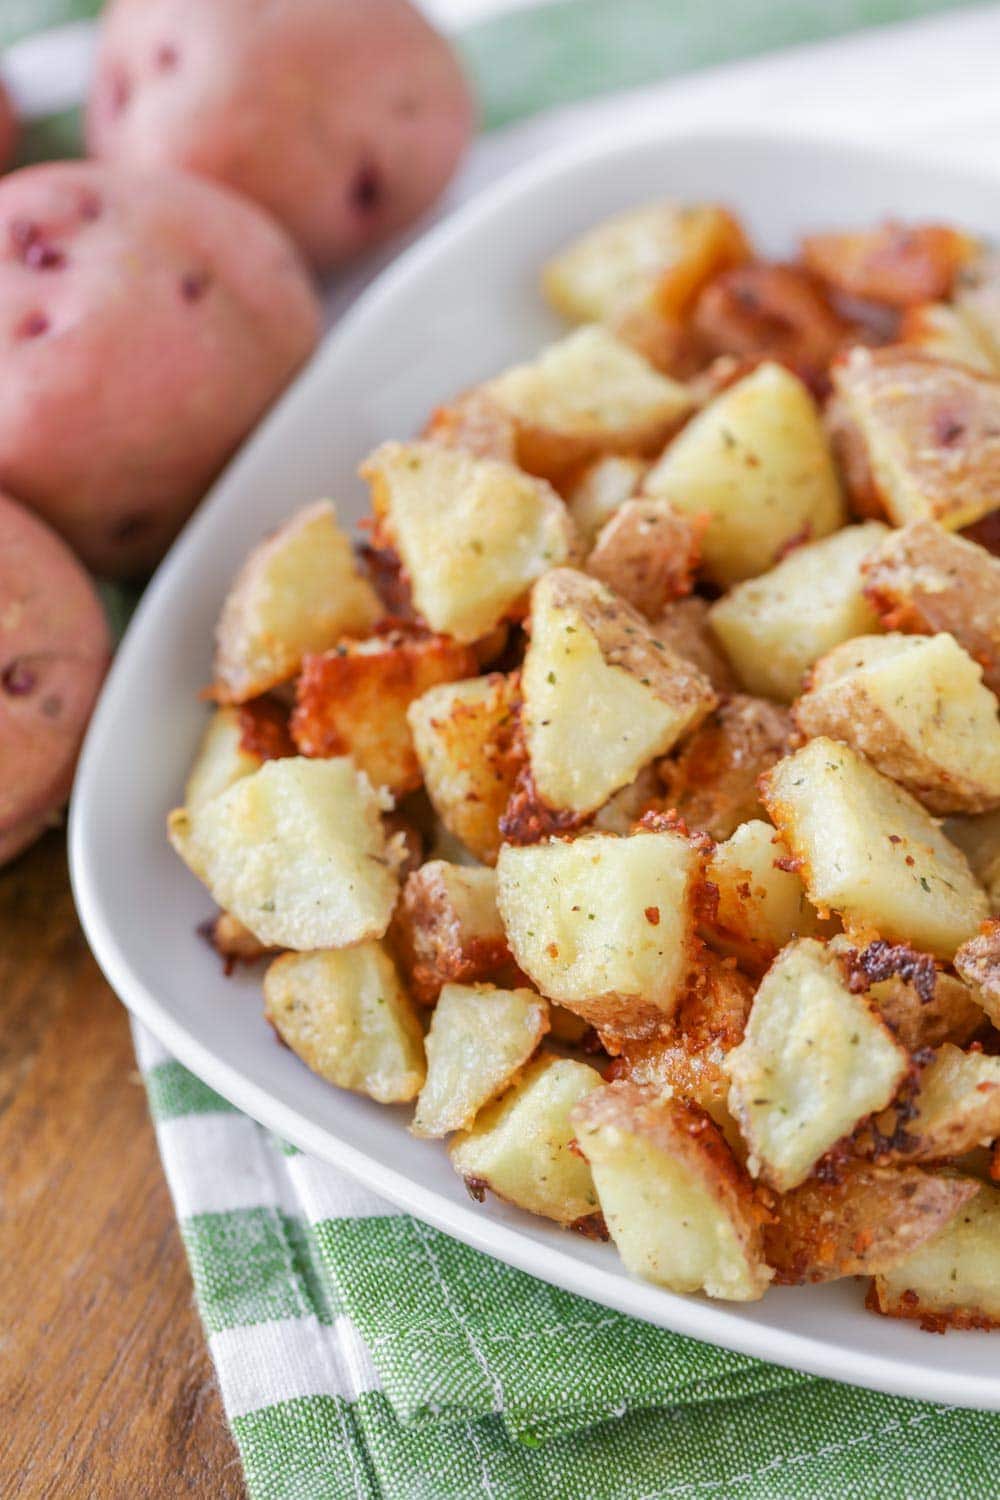 Parmesan potatoes recipe on plate